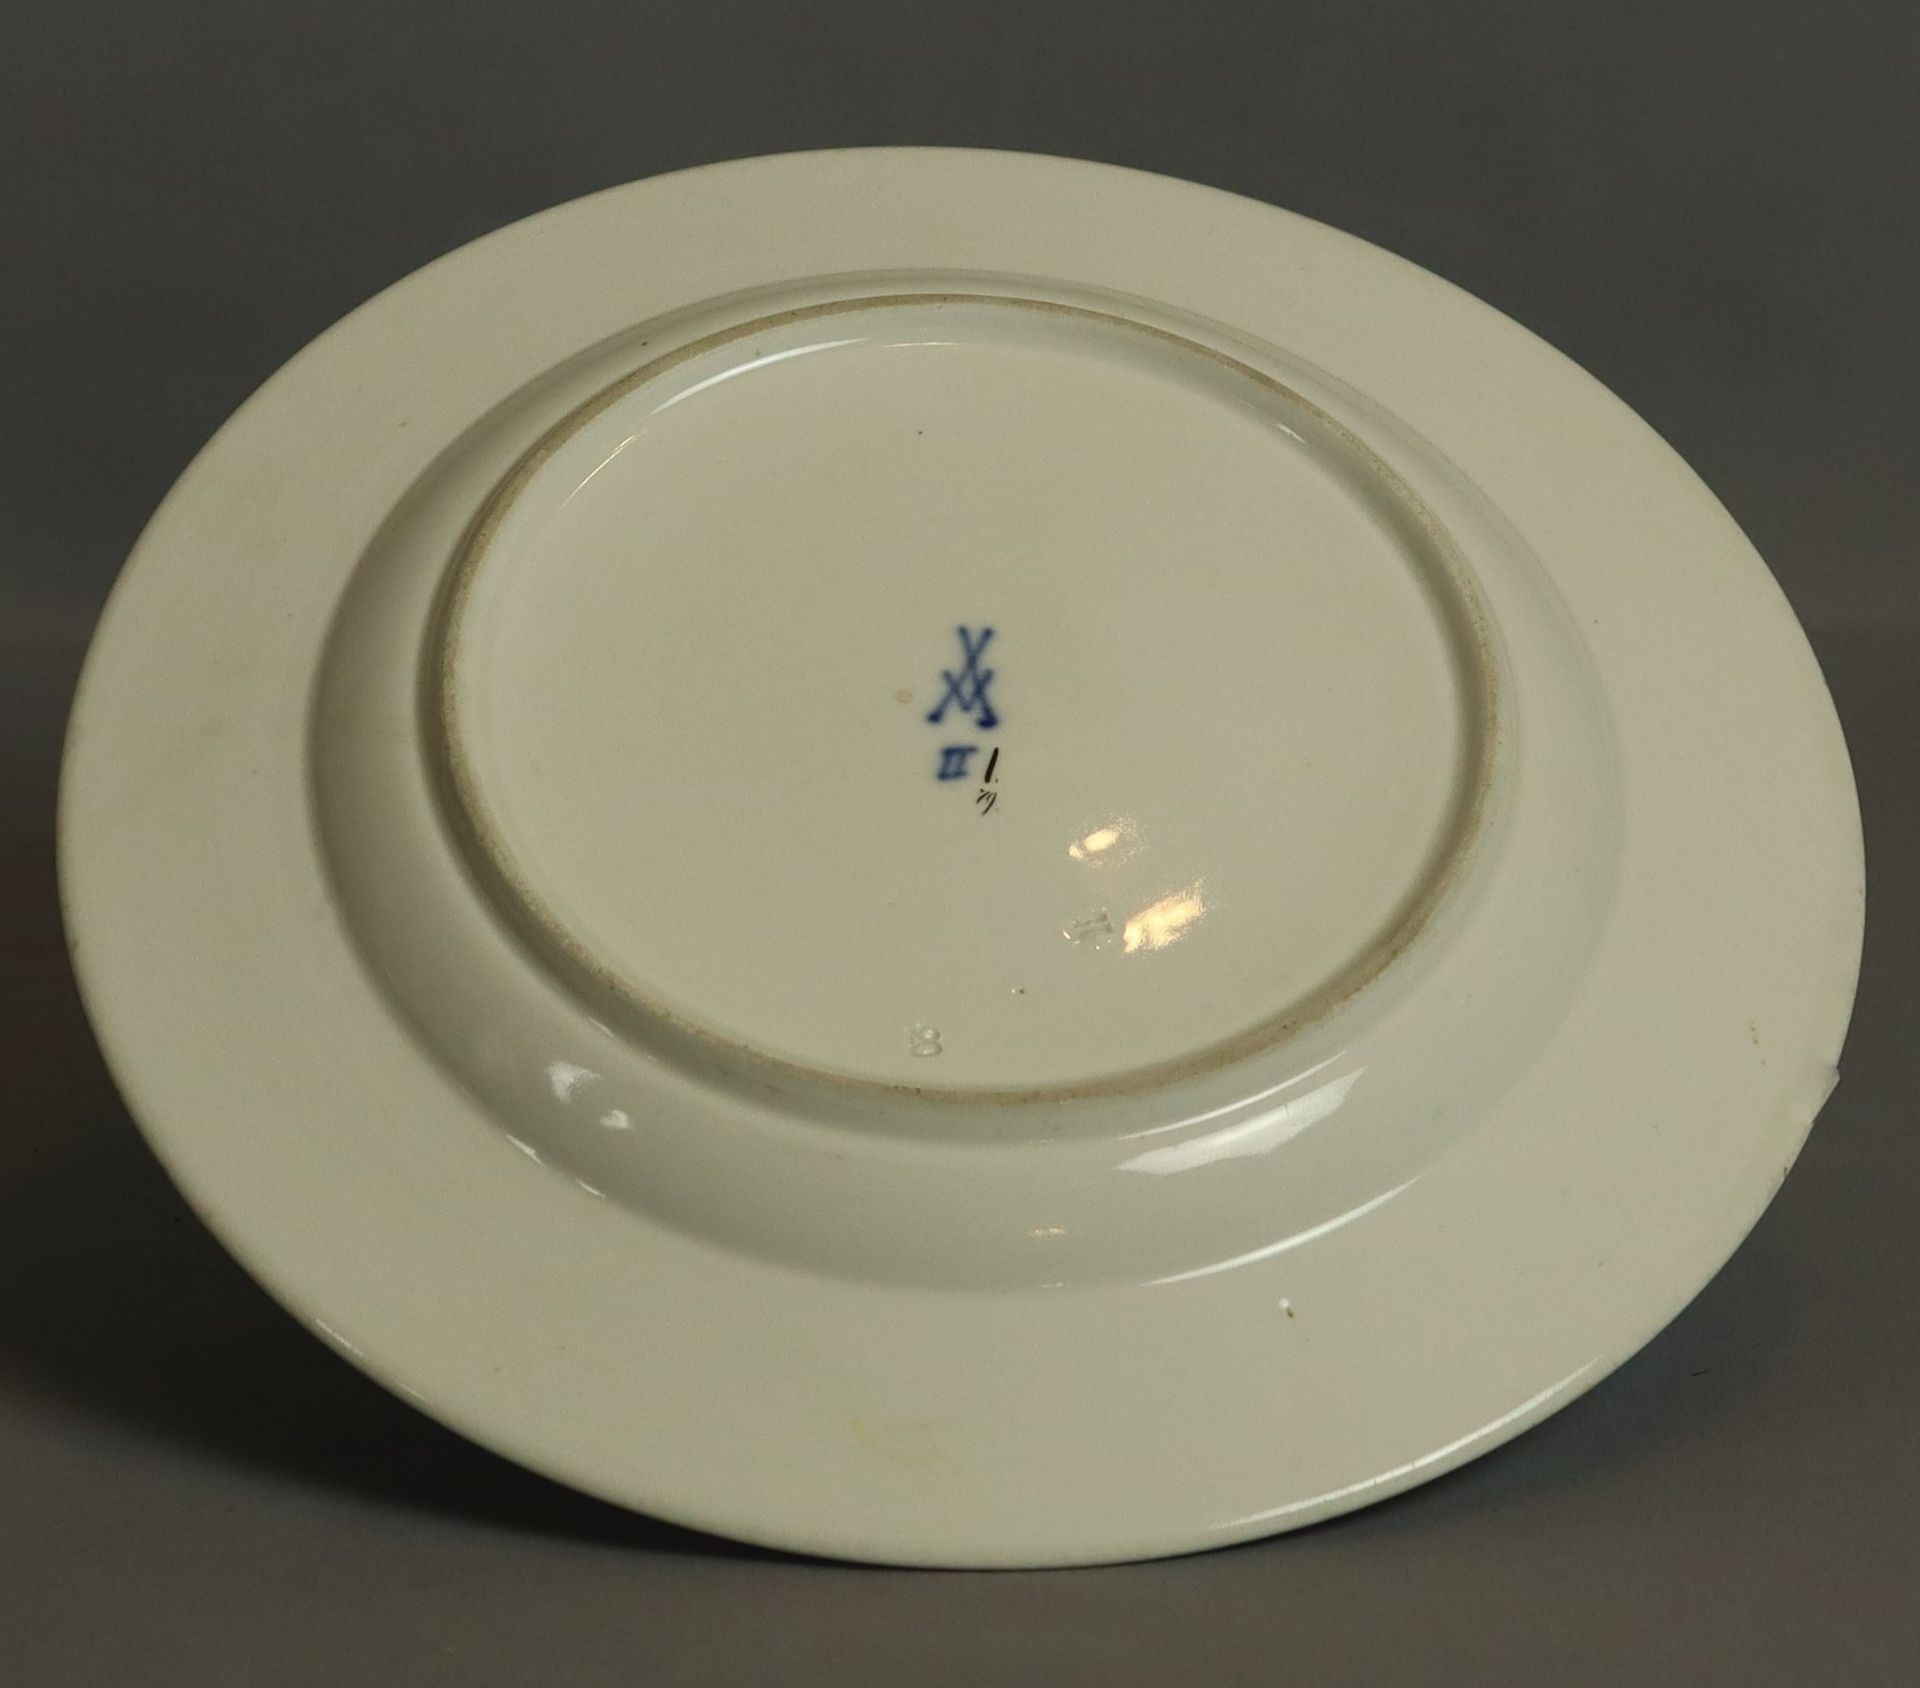 Meissen Schwertermarke dinner plate of the 18th/19th c., German - Image 2 of 2